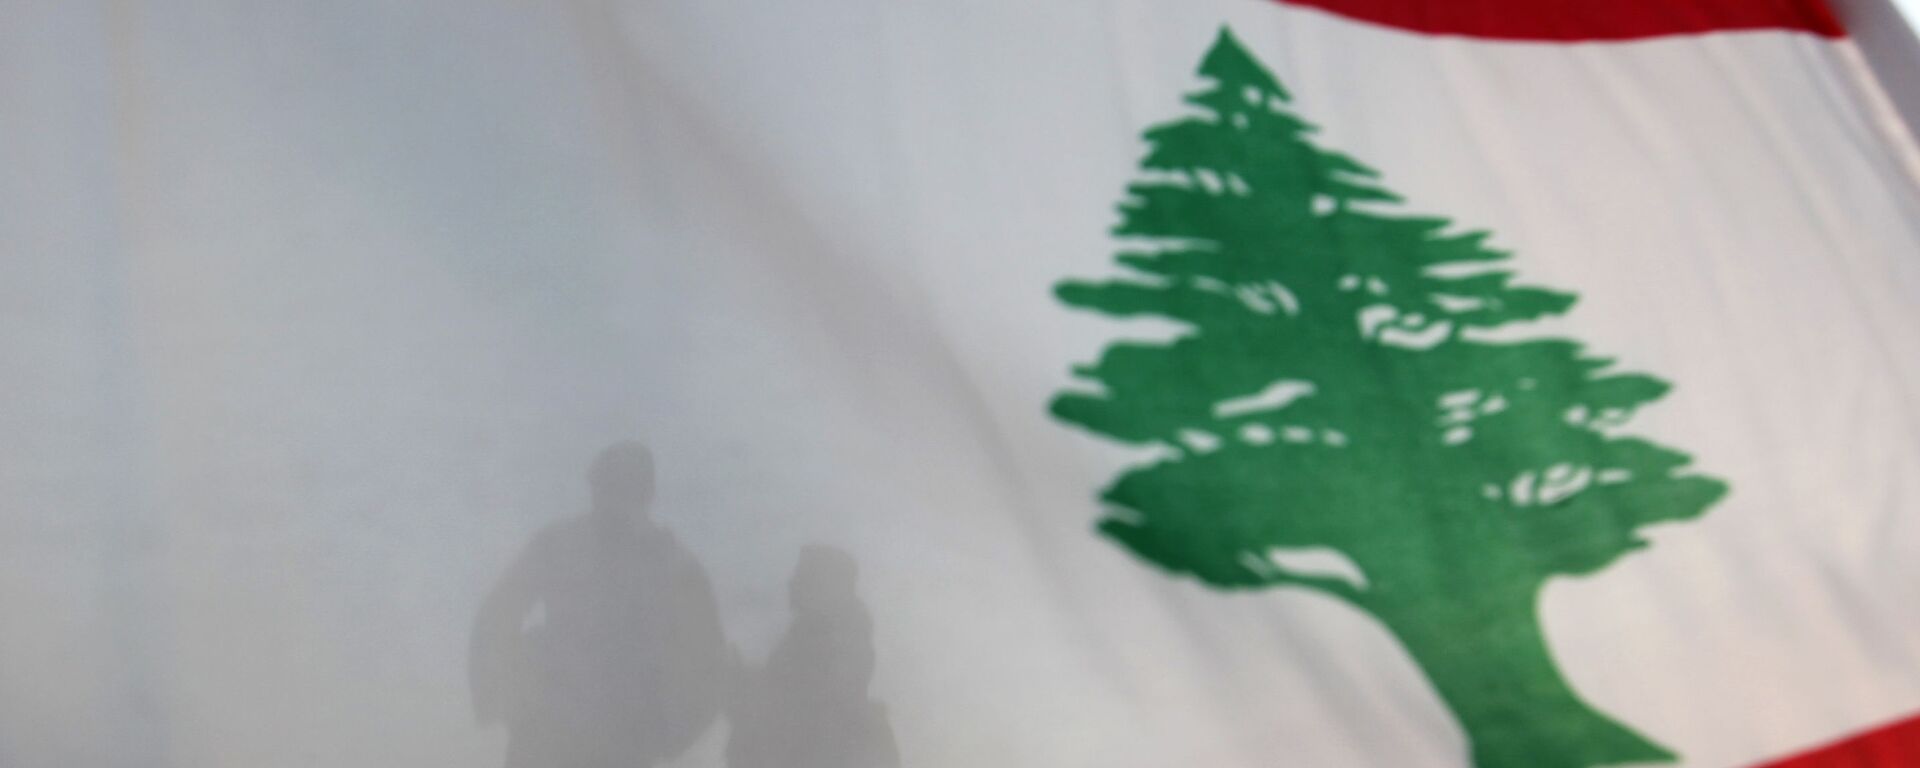 Bandera del Líbano - Sputnik Mundo, 1920, 19.06.2021